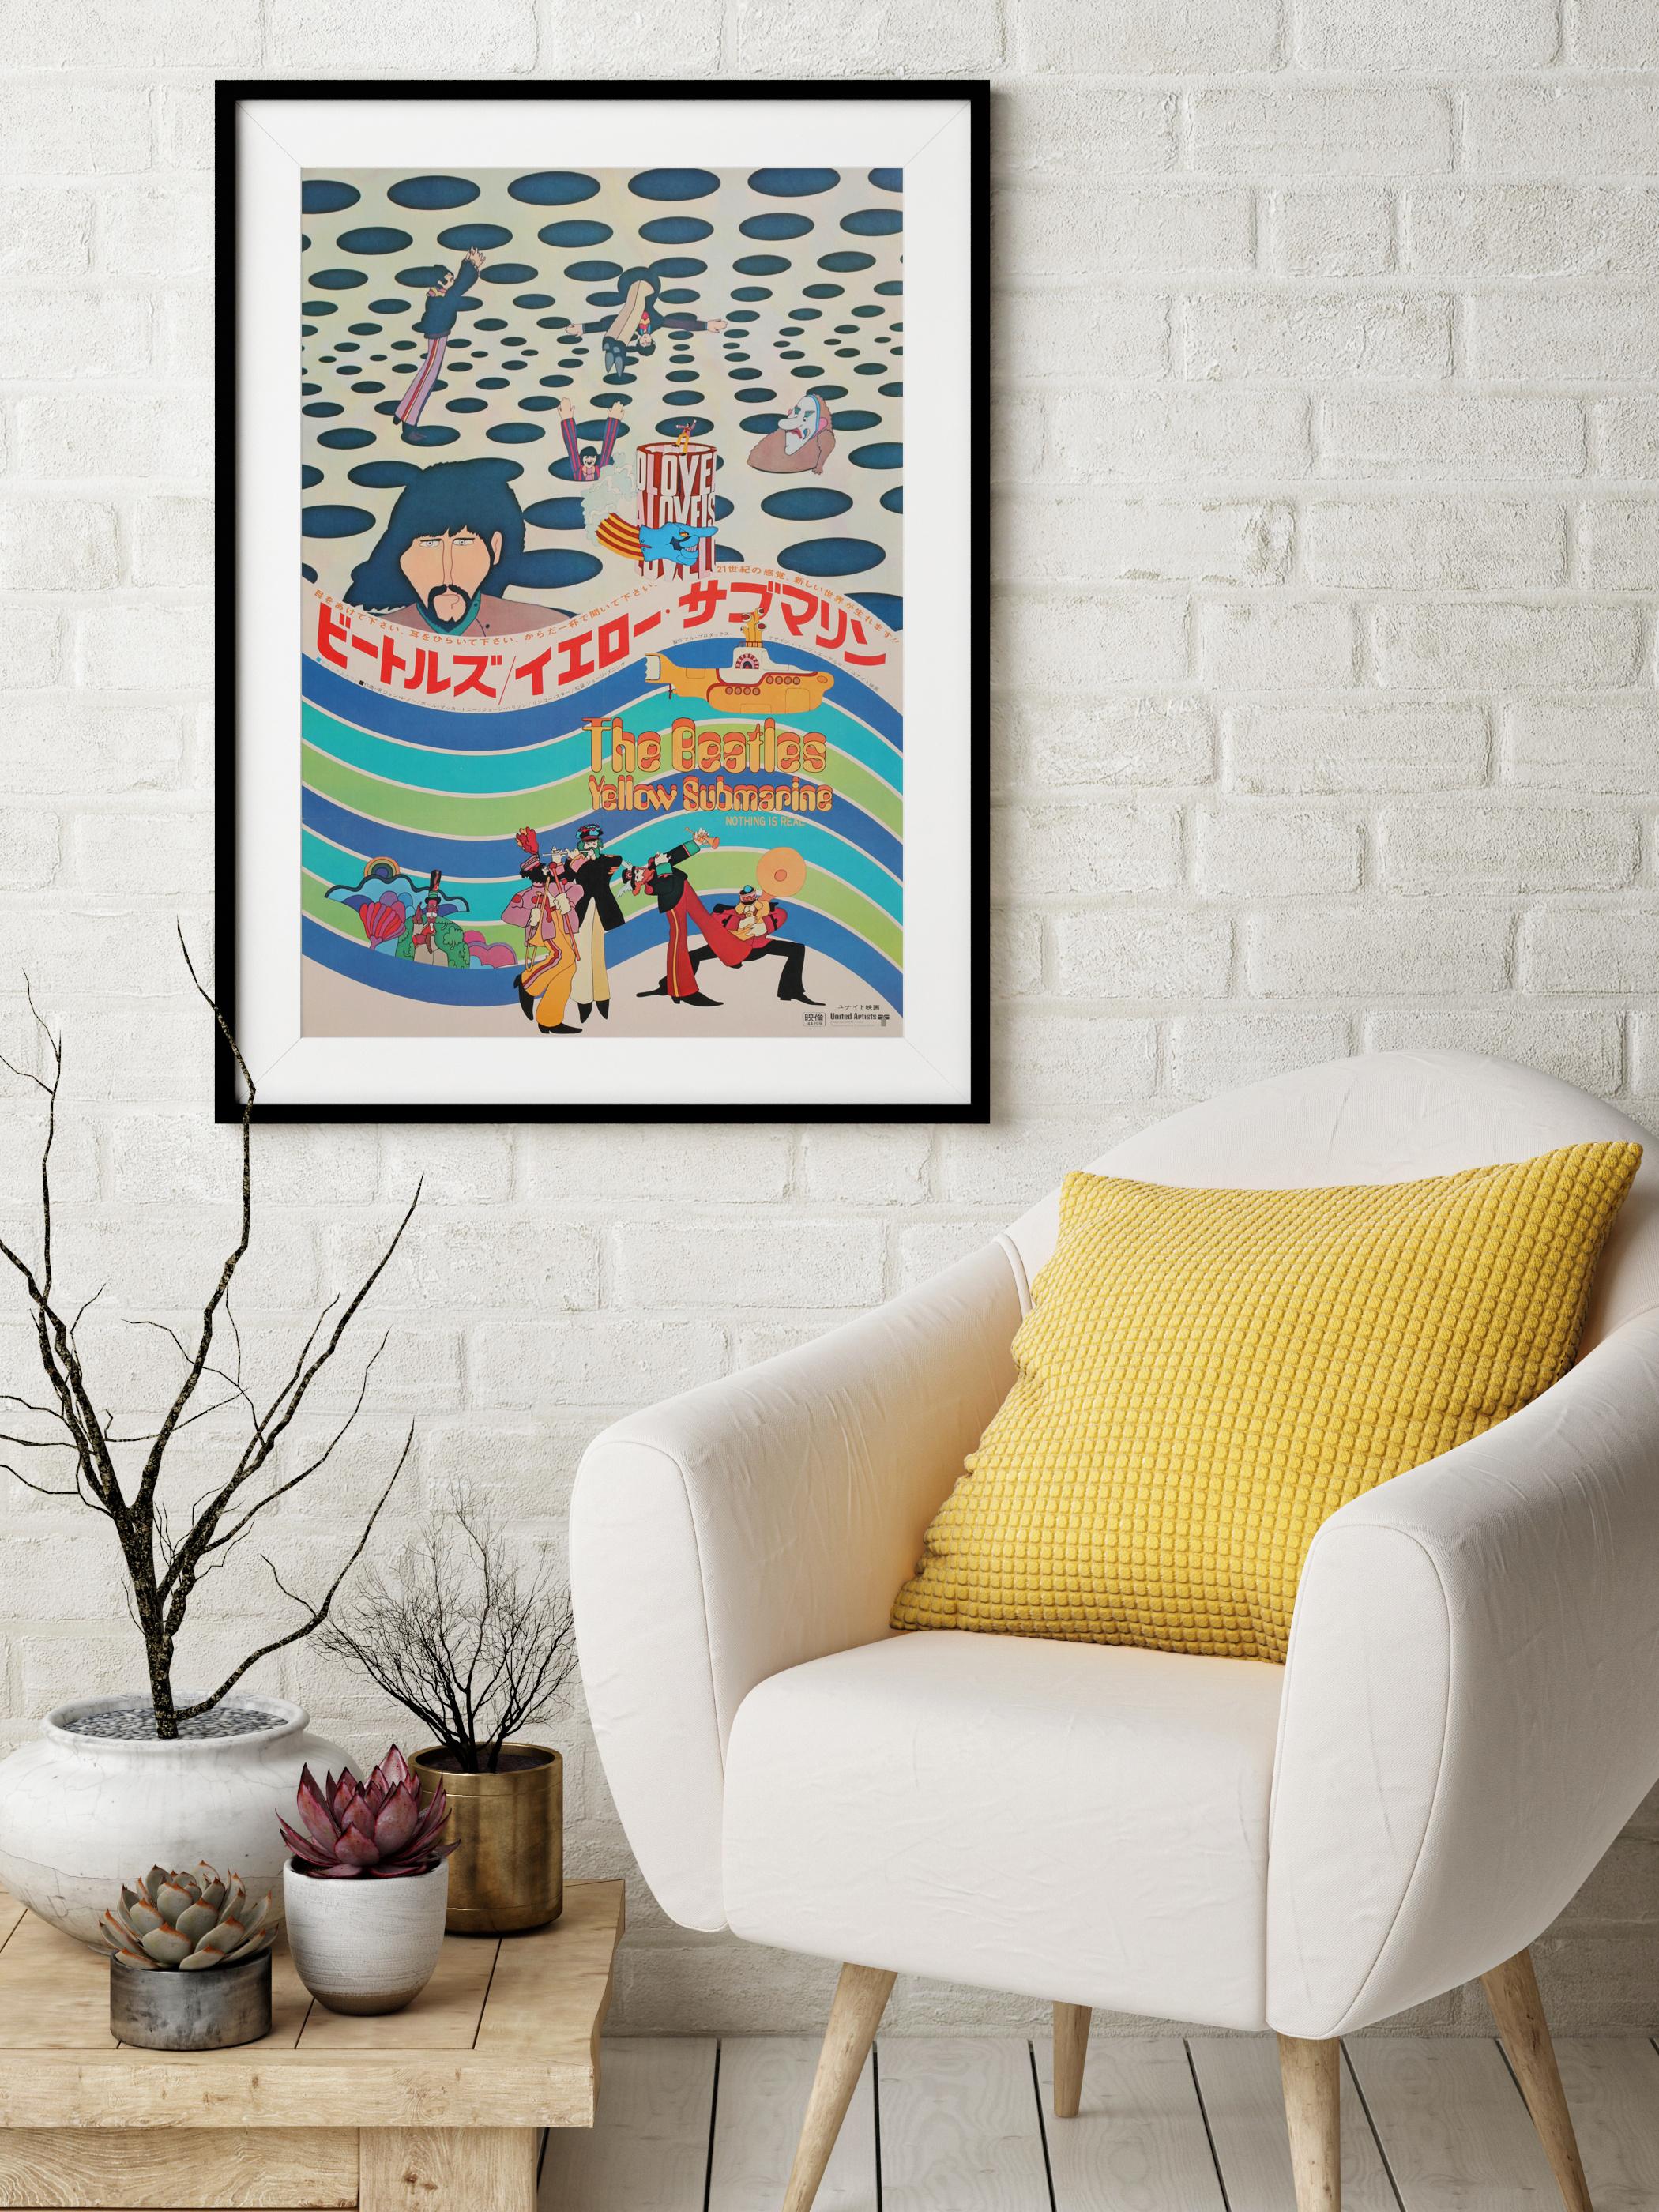 Post-Modern The Beatles 'Yellow Submarine' Original Vintage Movie Poster, Japanese, 1969